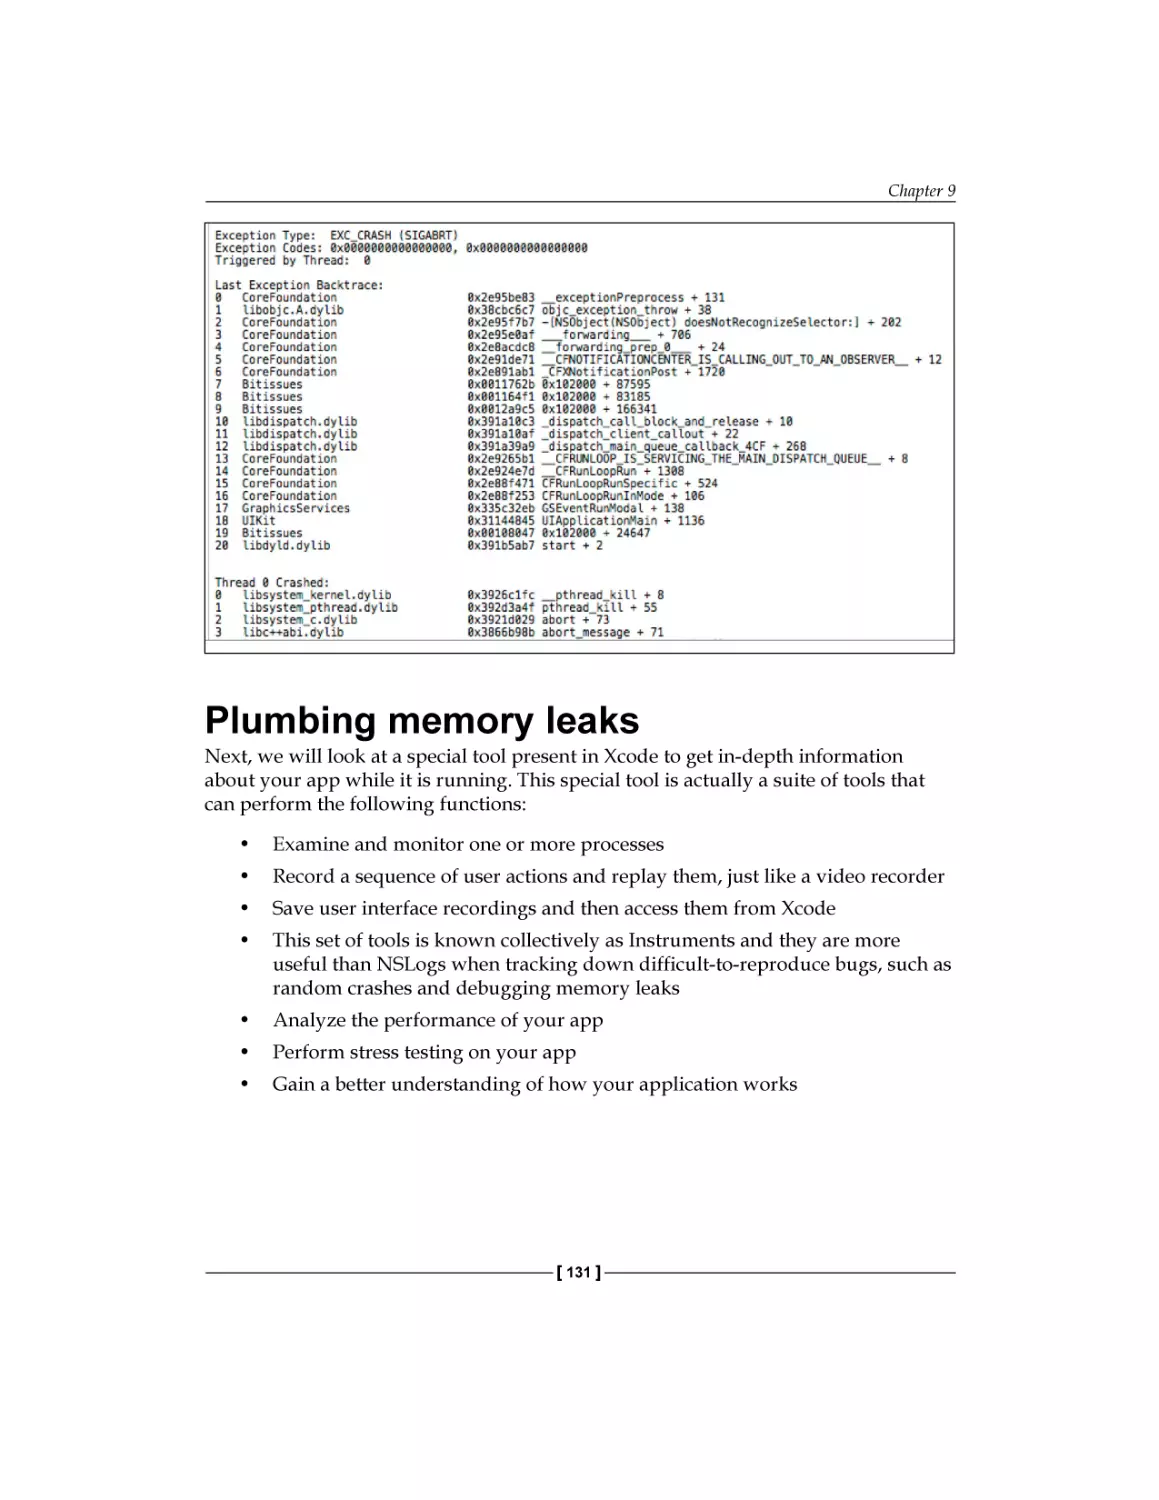 Plumbing memory leaks